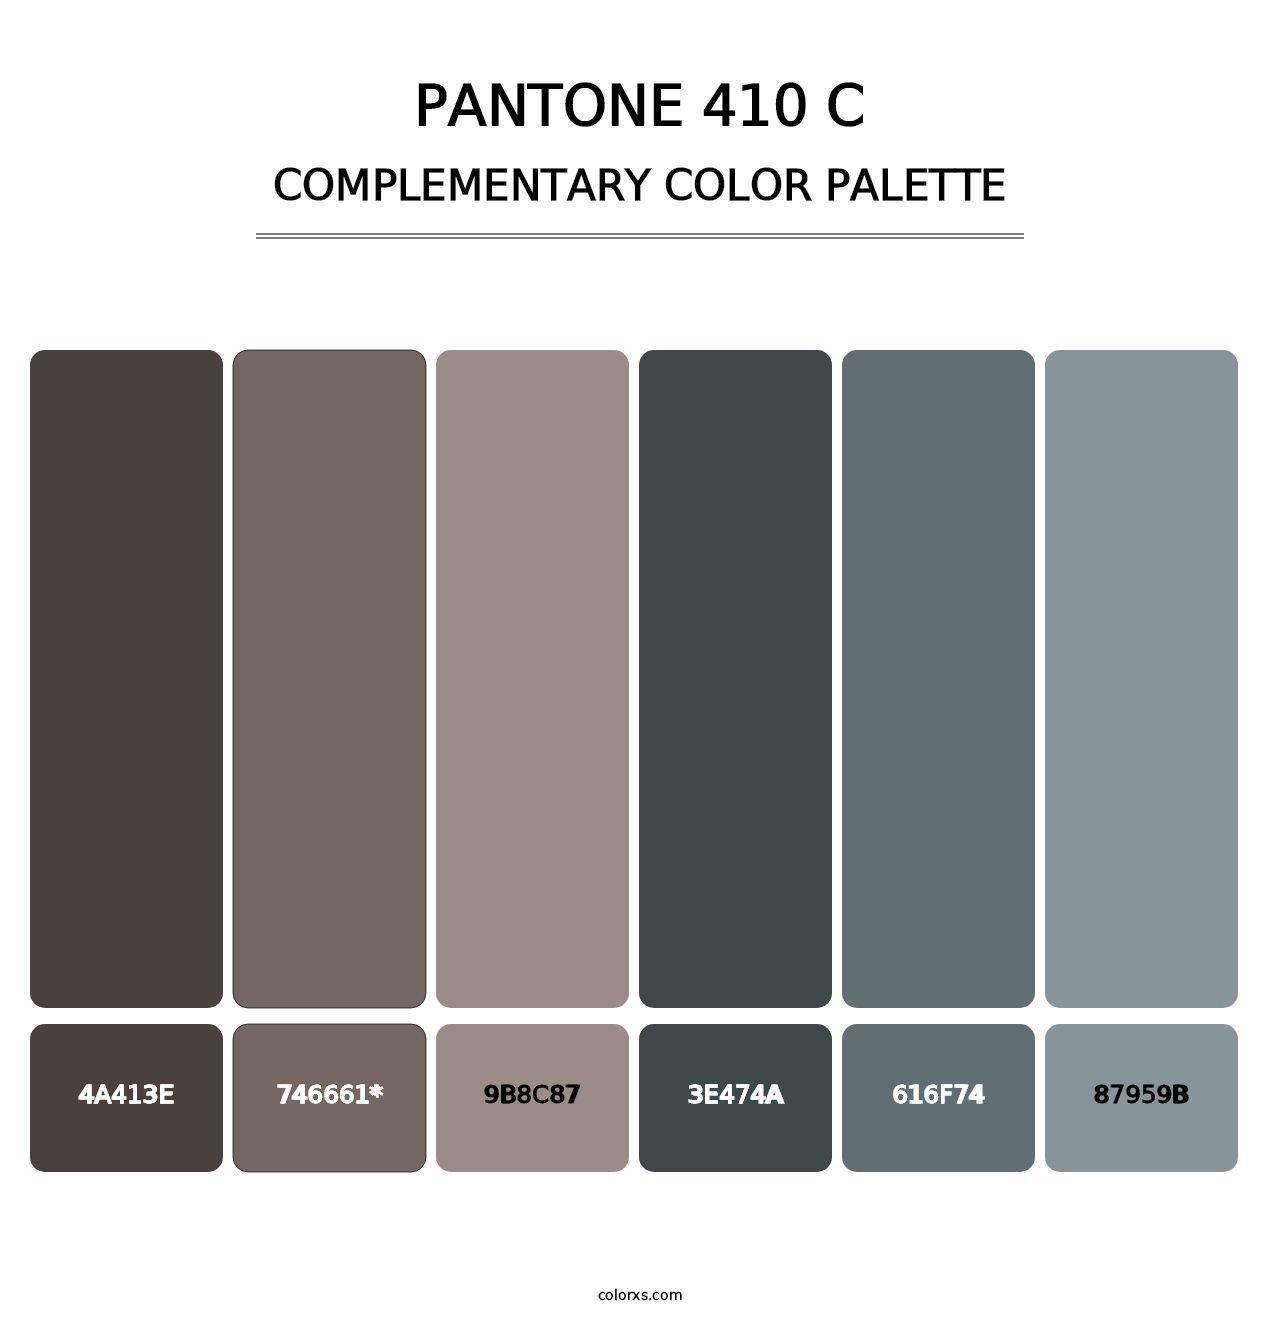 PANTONE 410 C - Complementary Color Palette